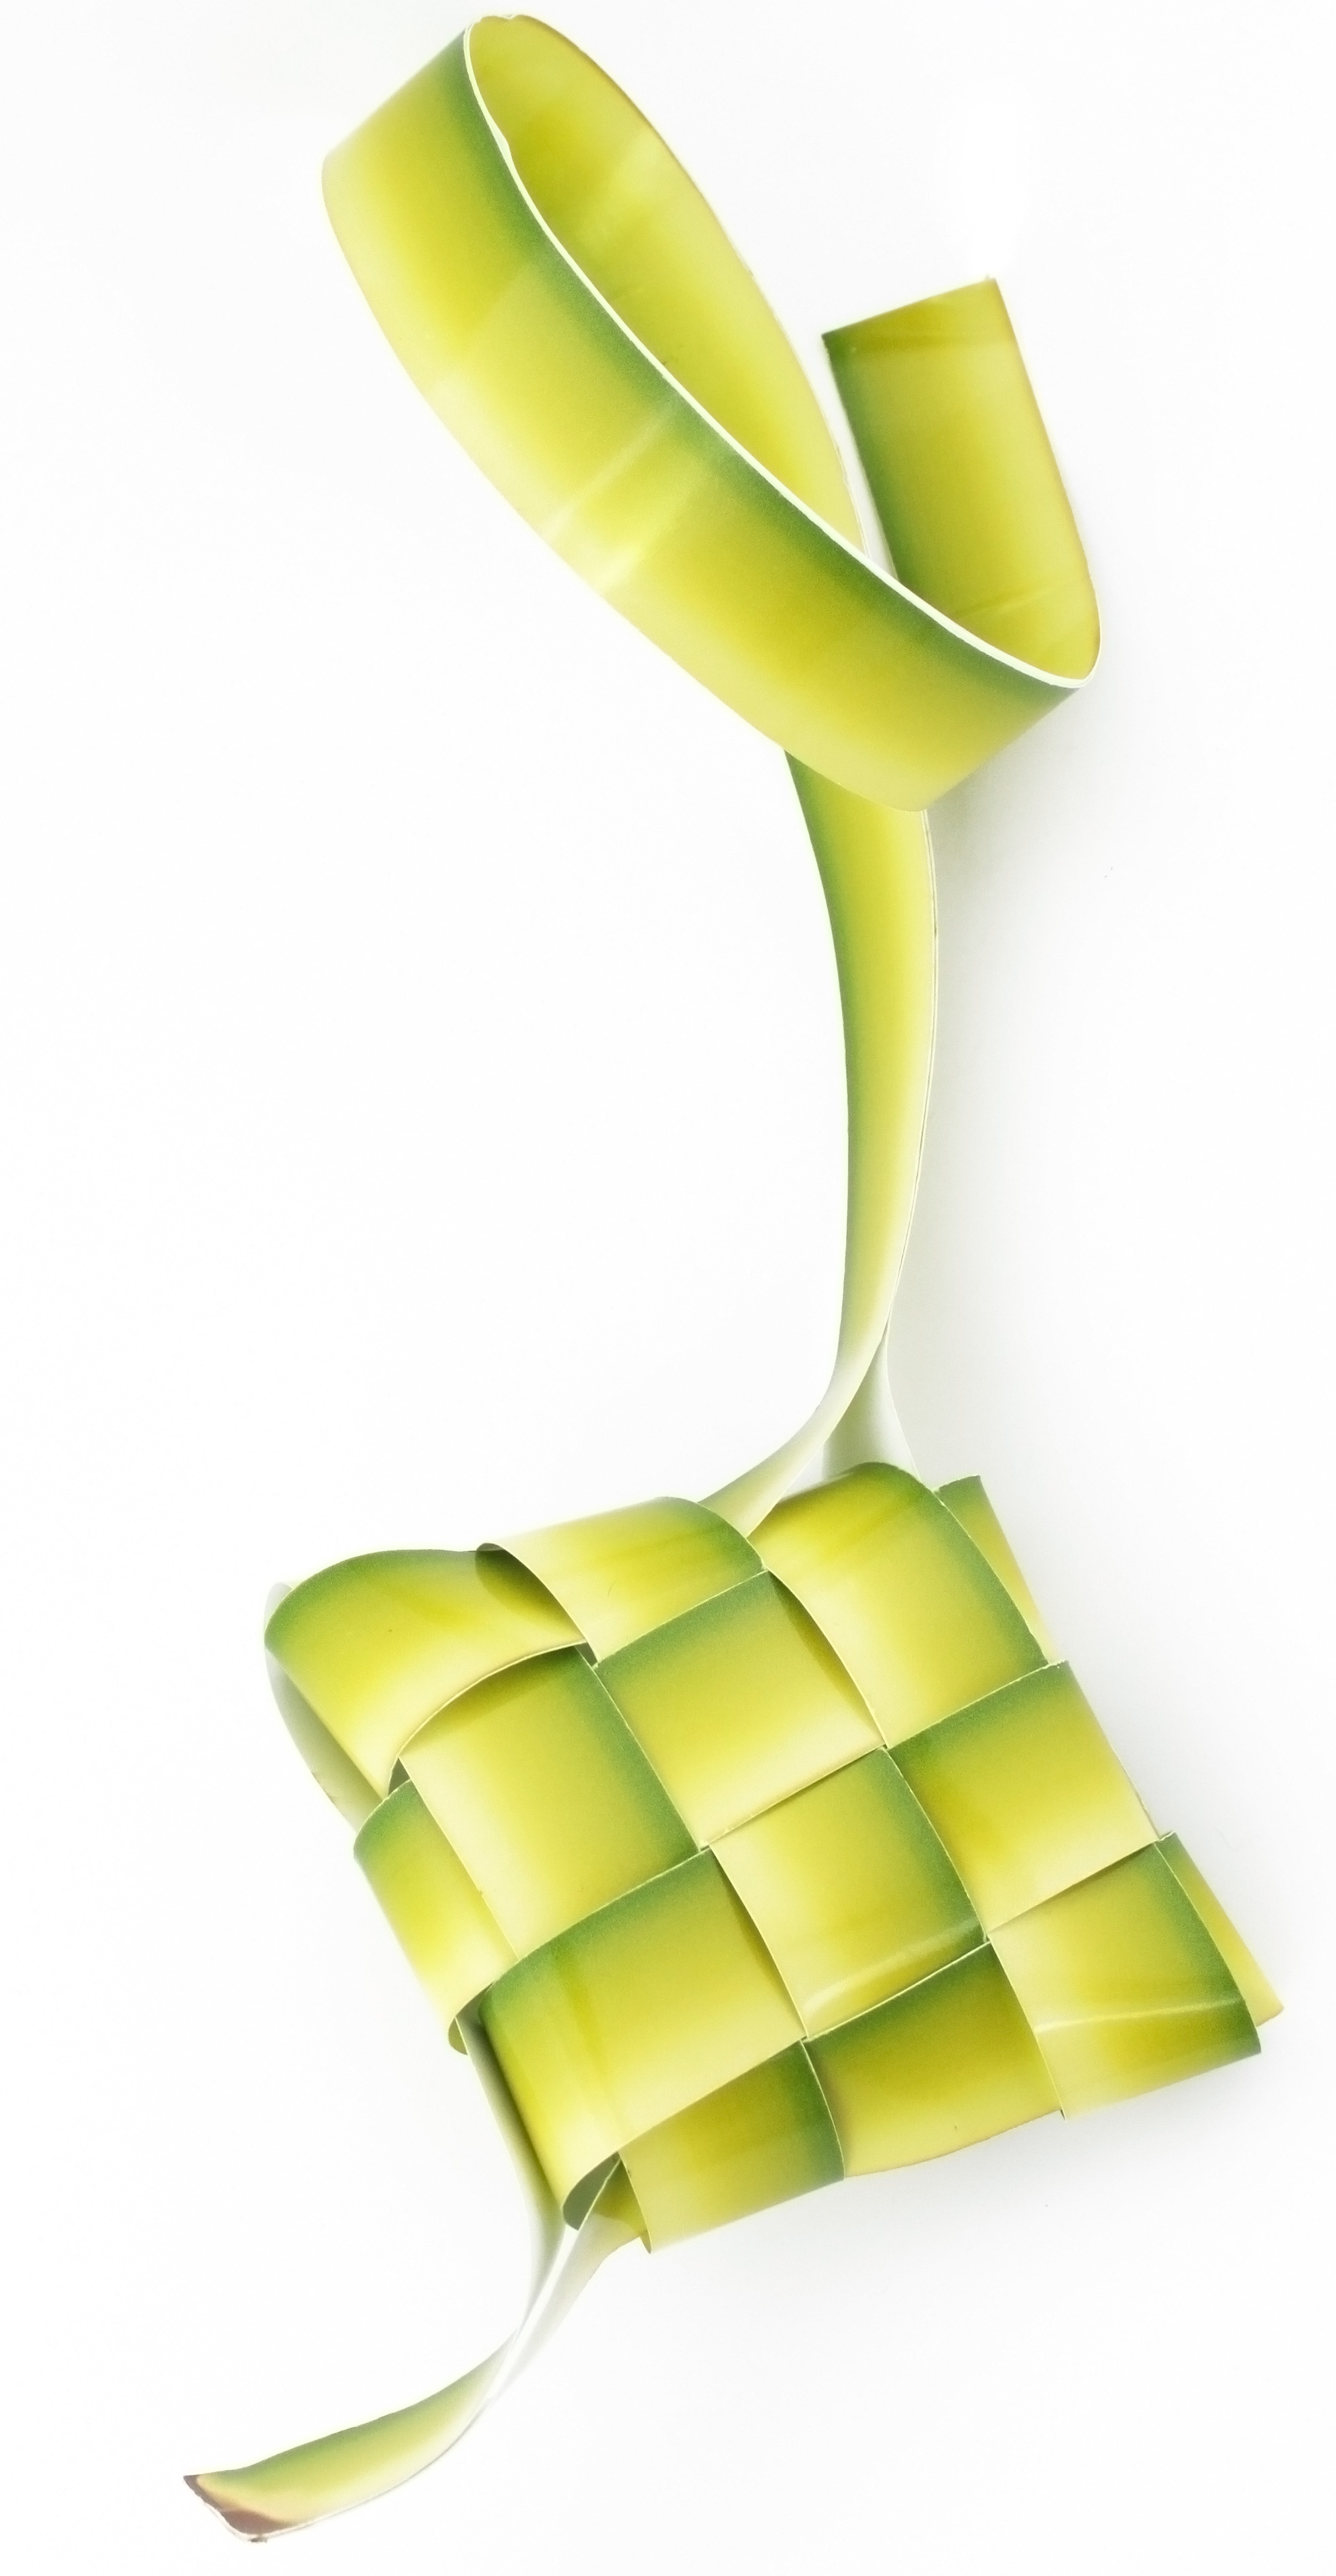 File:Drawing of a ketupat - 04.jpg - Wikimedia Commons